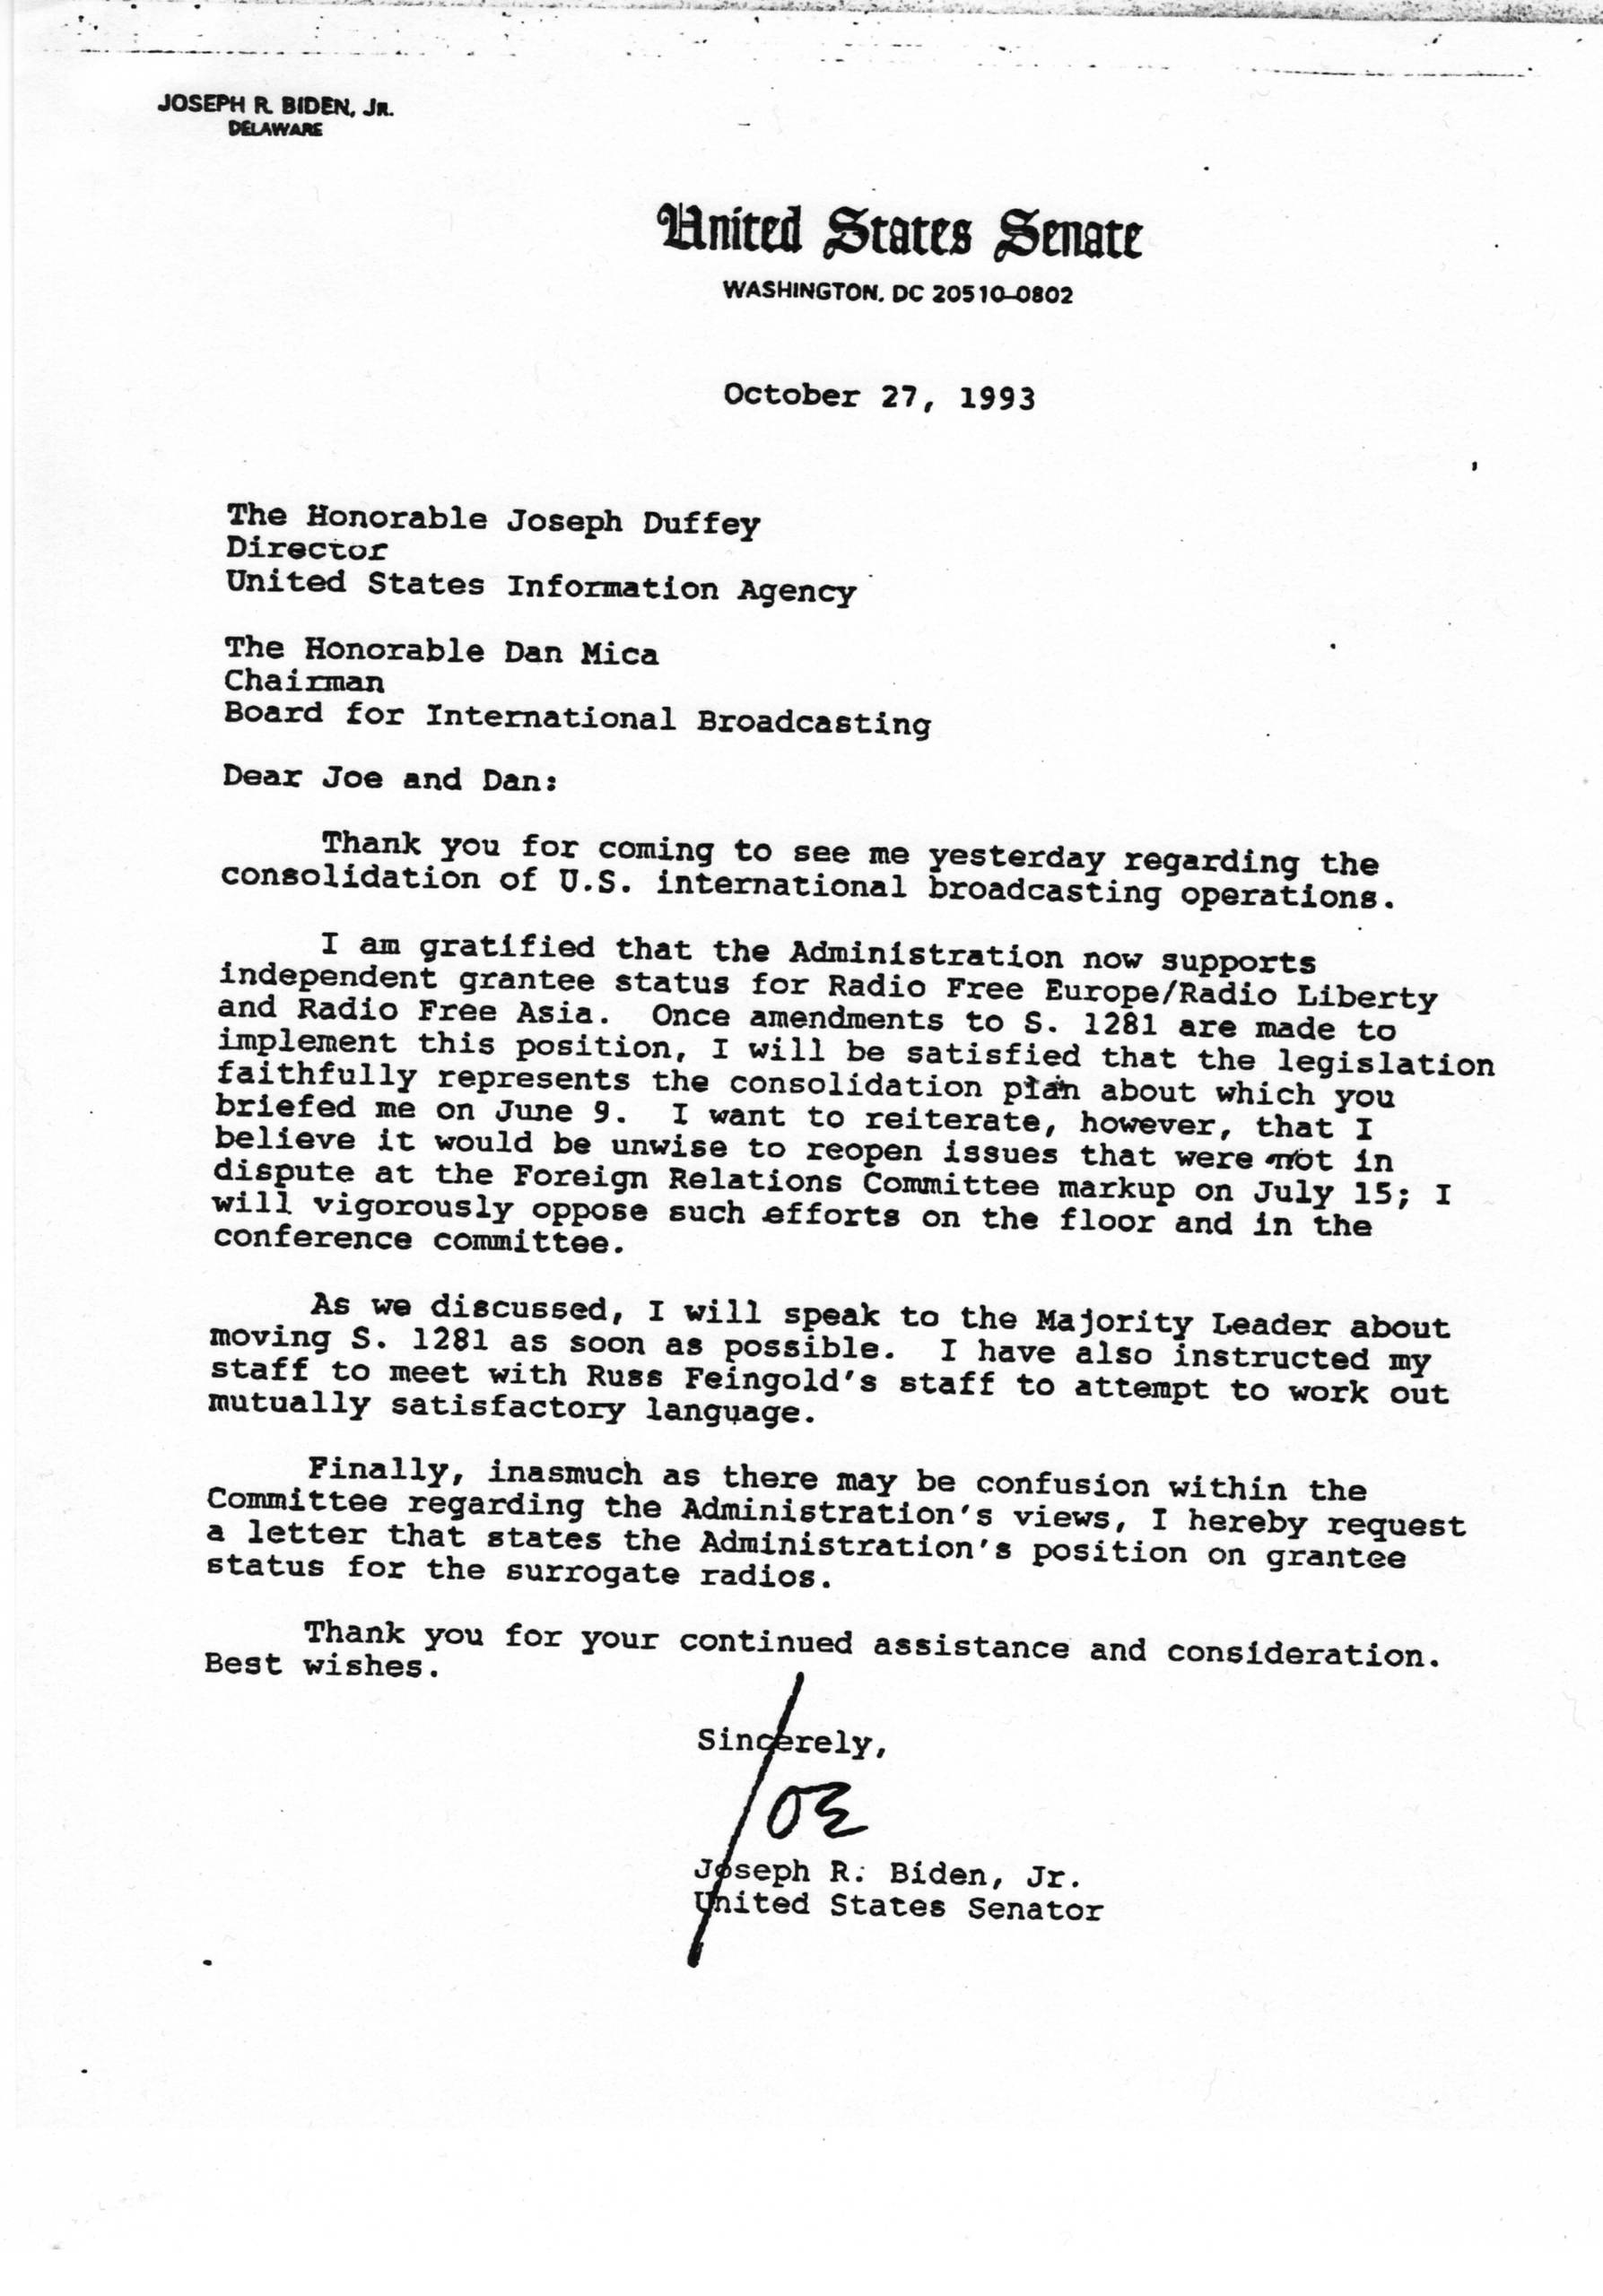 U.S. Senator Joseph Biden's letter to USIA Director Joseph Duffey and BIB Chairman Dan Mica defending independent grantee status for Radio Free Europe/Radio Liberty (RFE/RL), October 27, 1993.